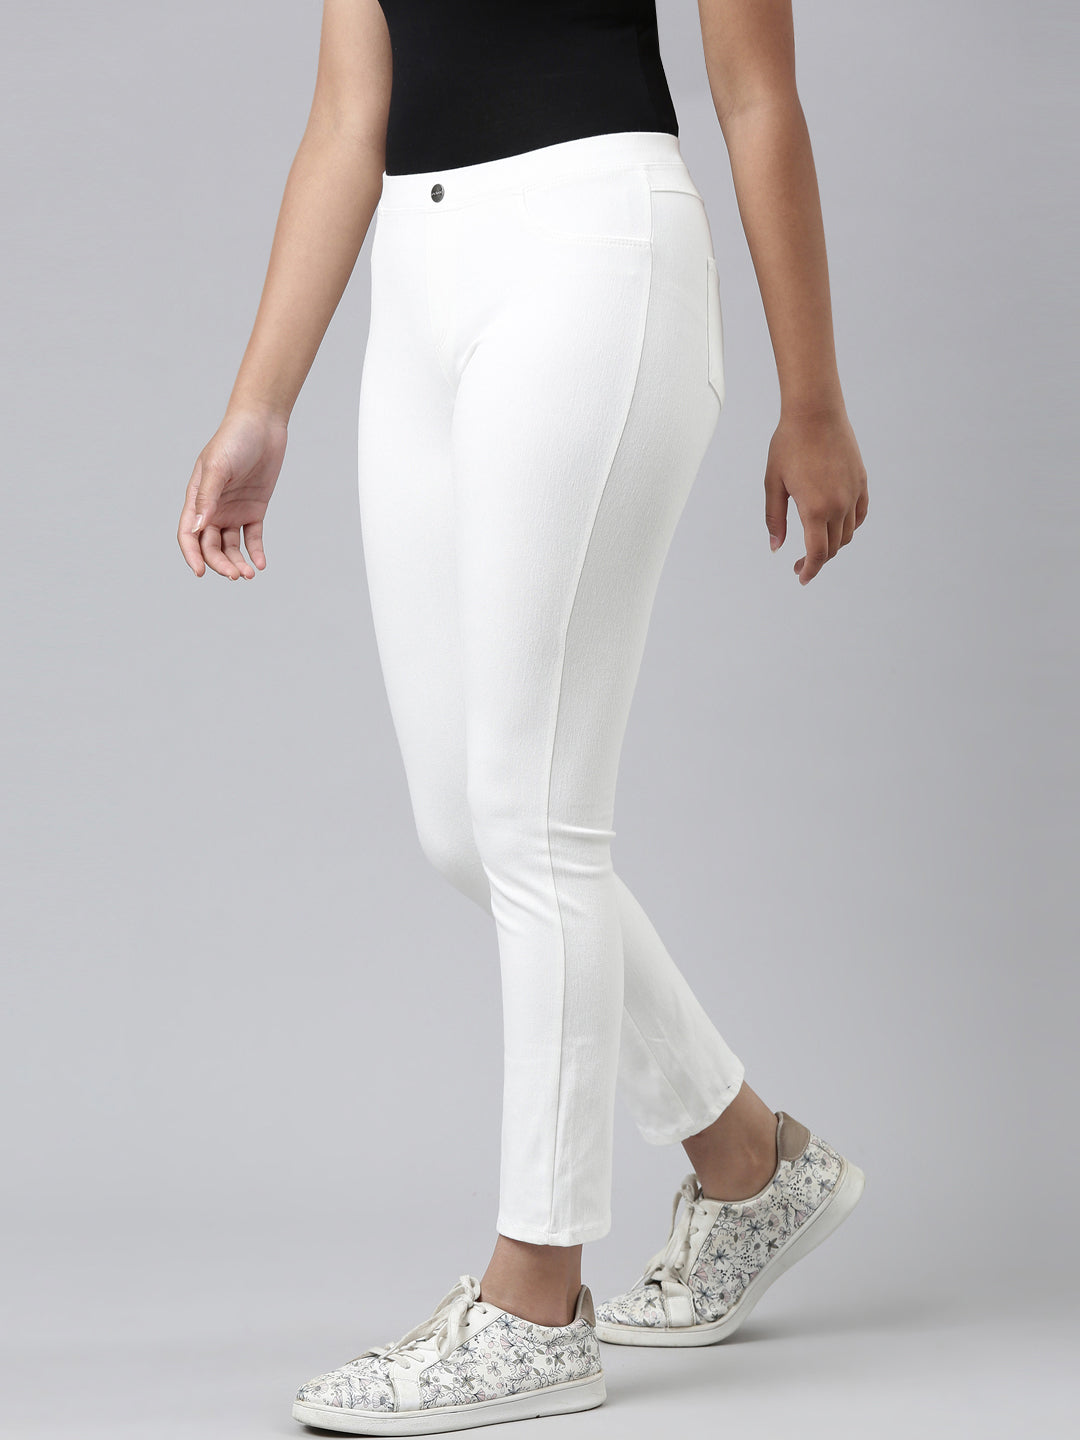 Fashion Ladies Maroon Tights/Jeggings- White Yoga Stripes @ Best